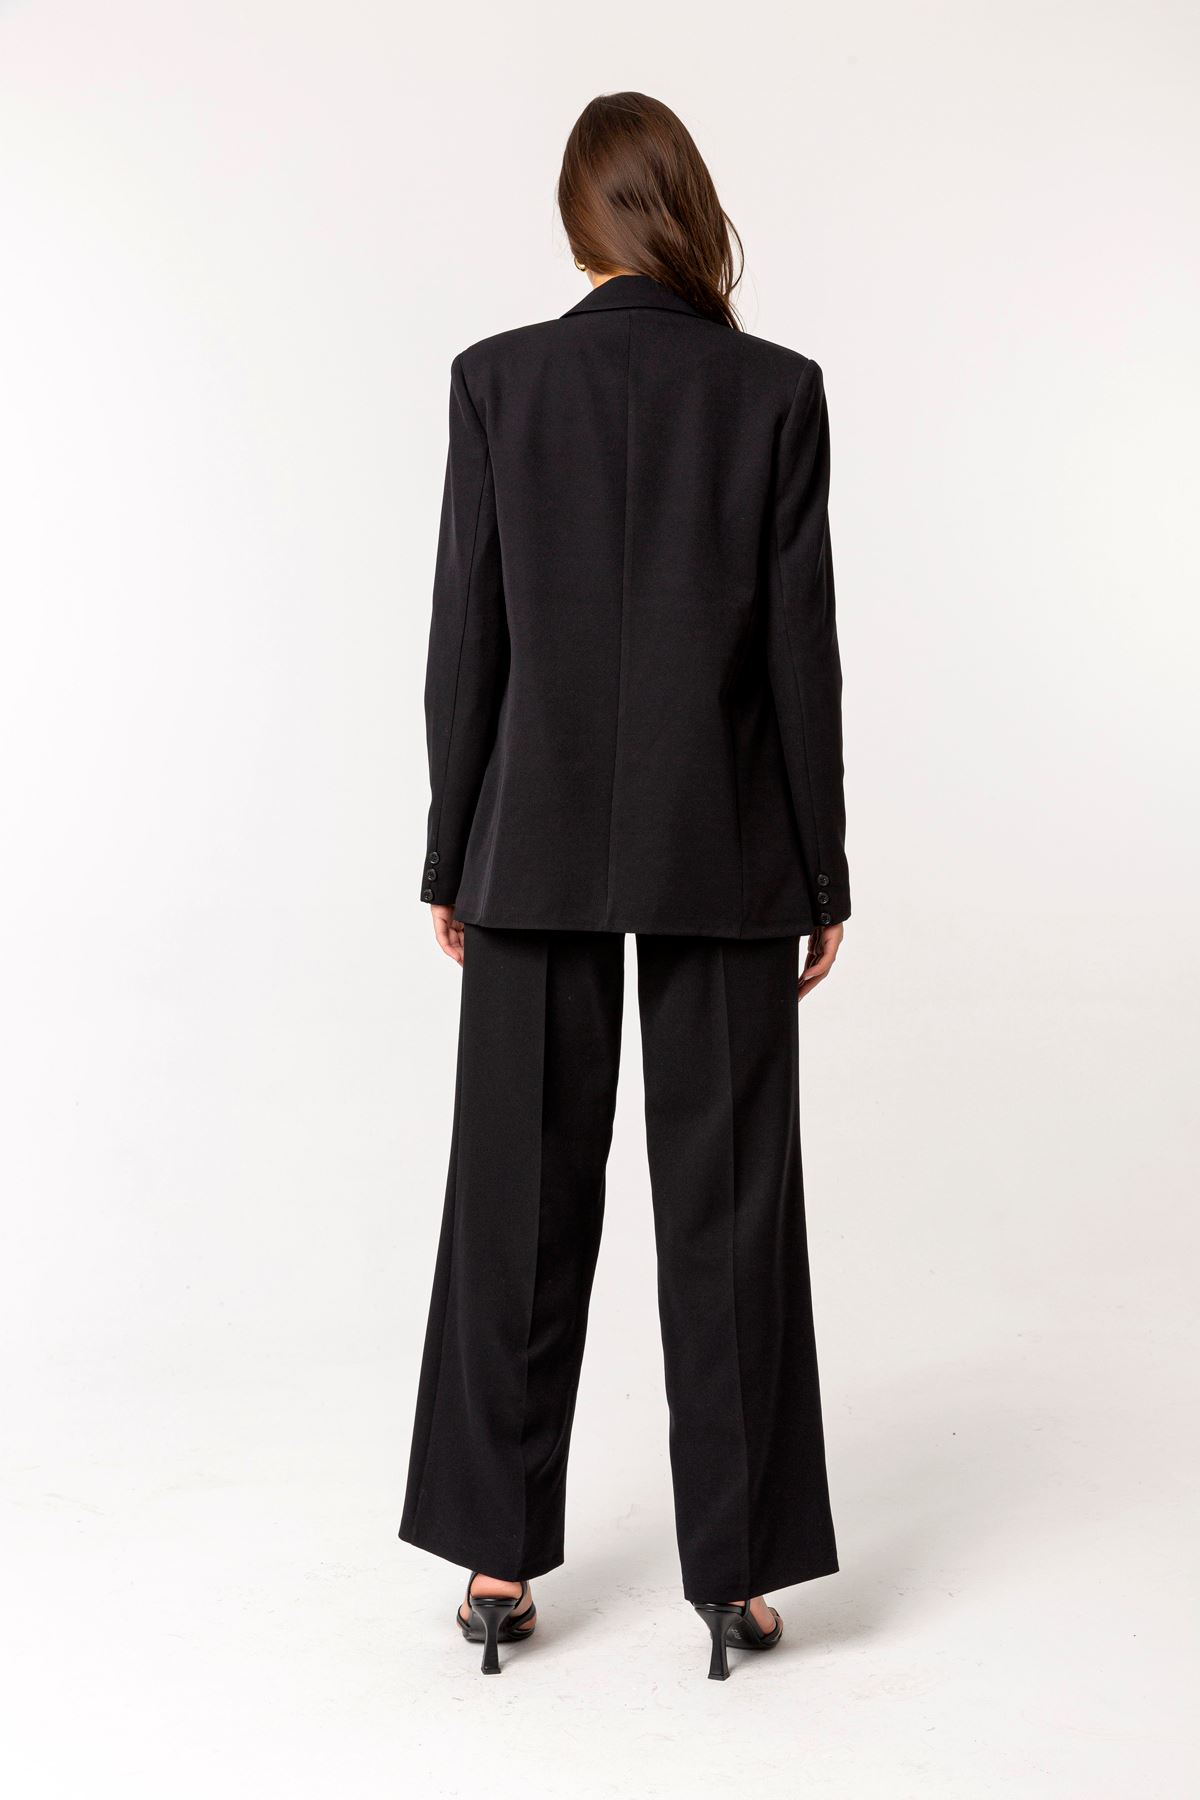 Atlas Fabric Revere Collar Below Hip Classical Single Button Women Jacket - Black